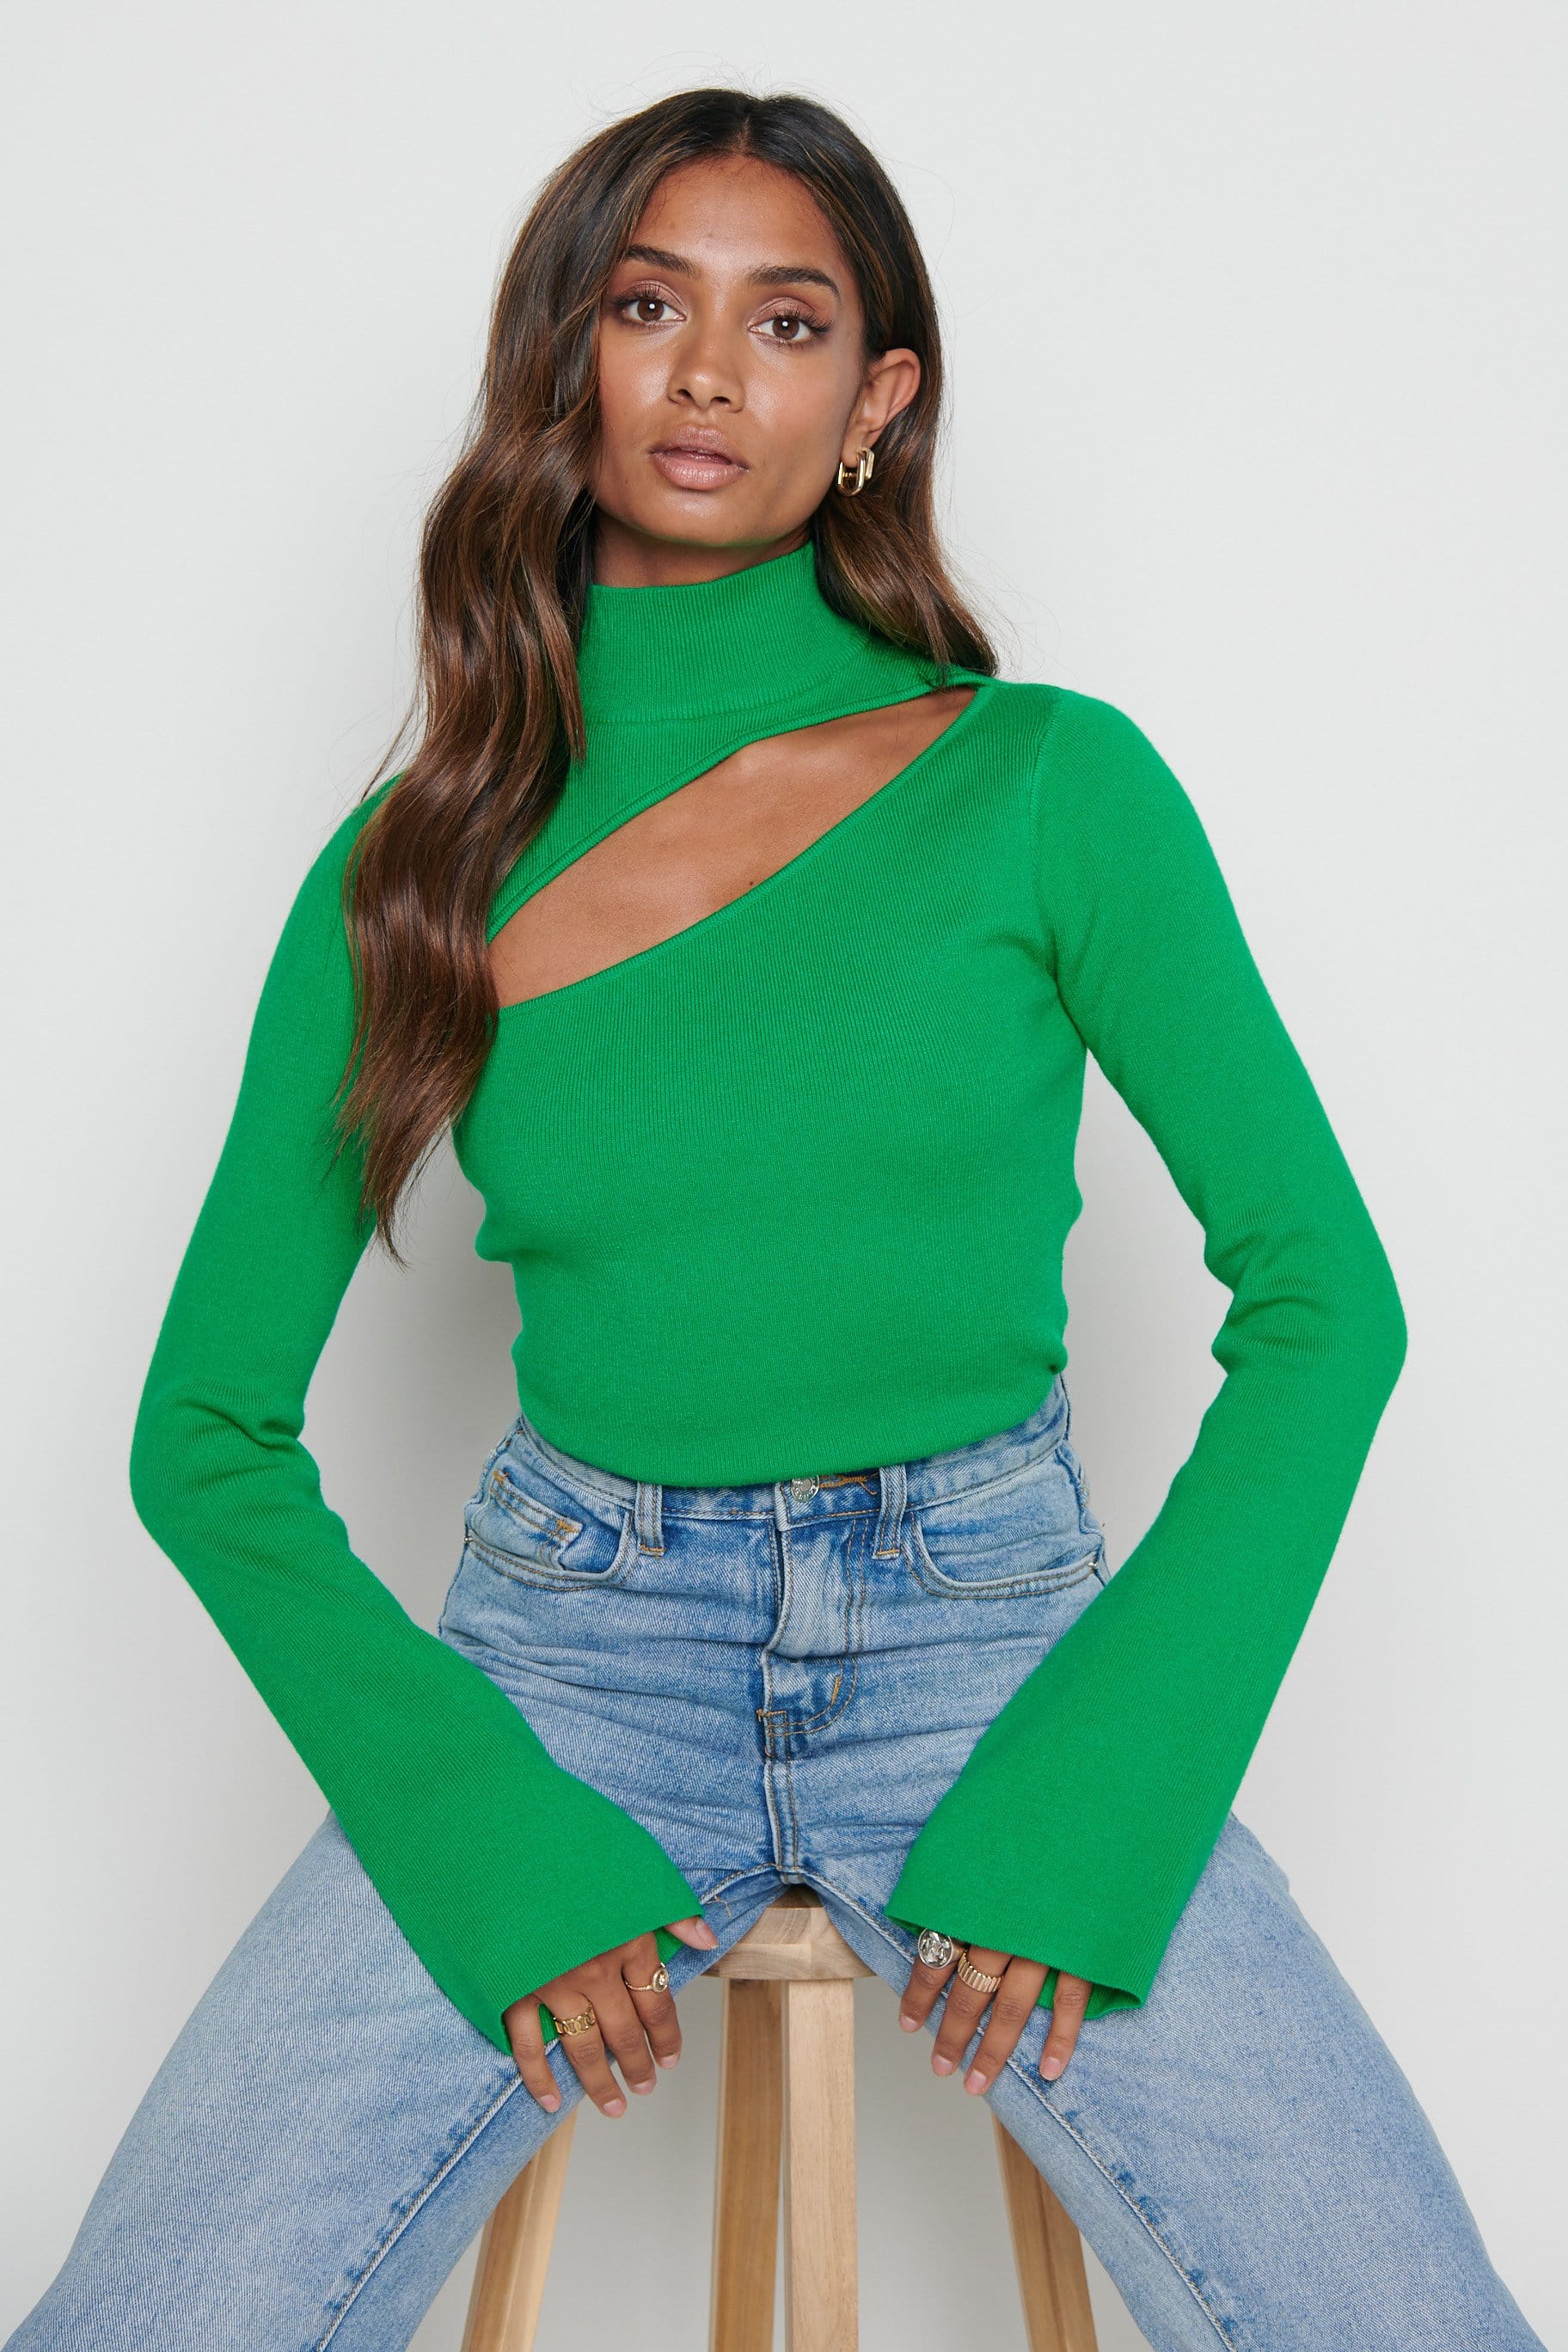 Shani Cut Out Knit Top - Bright Emerald, XL